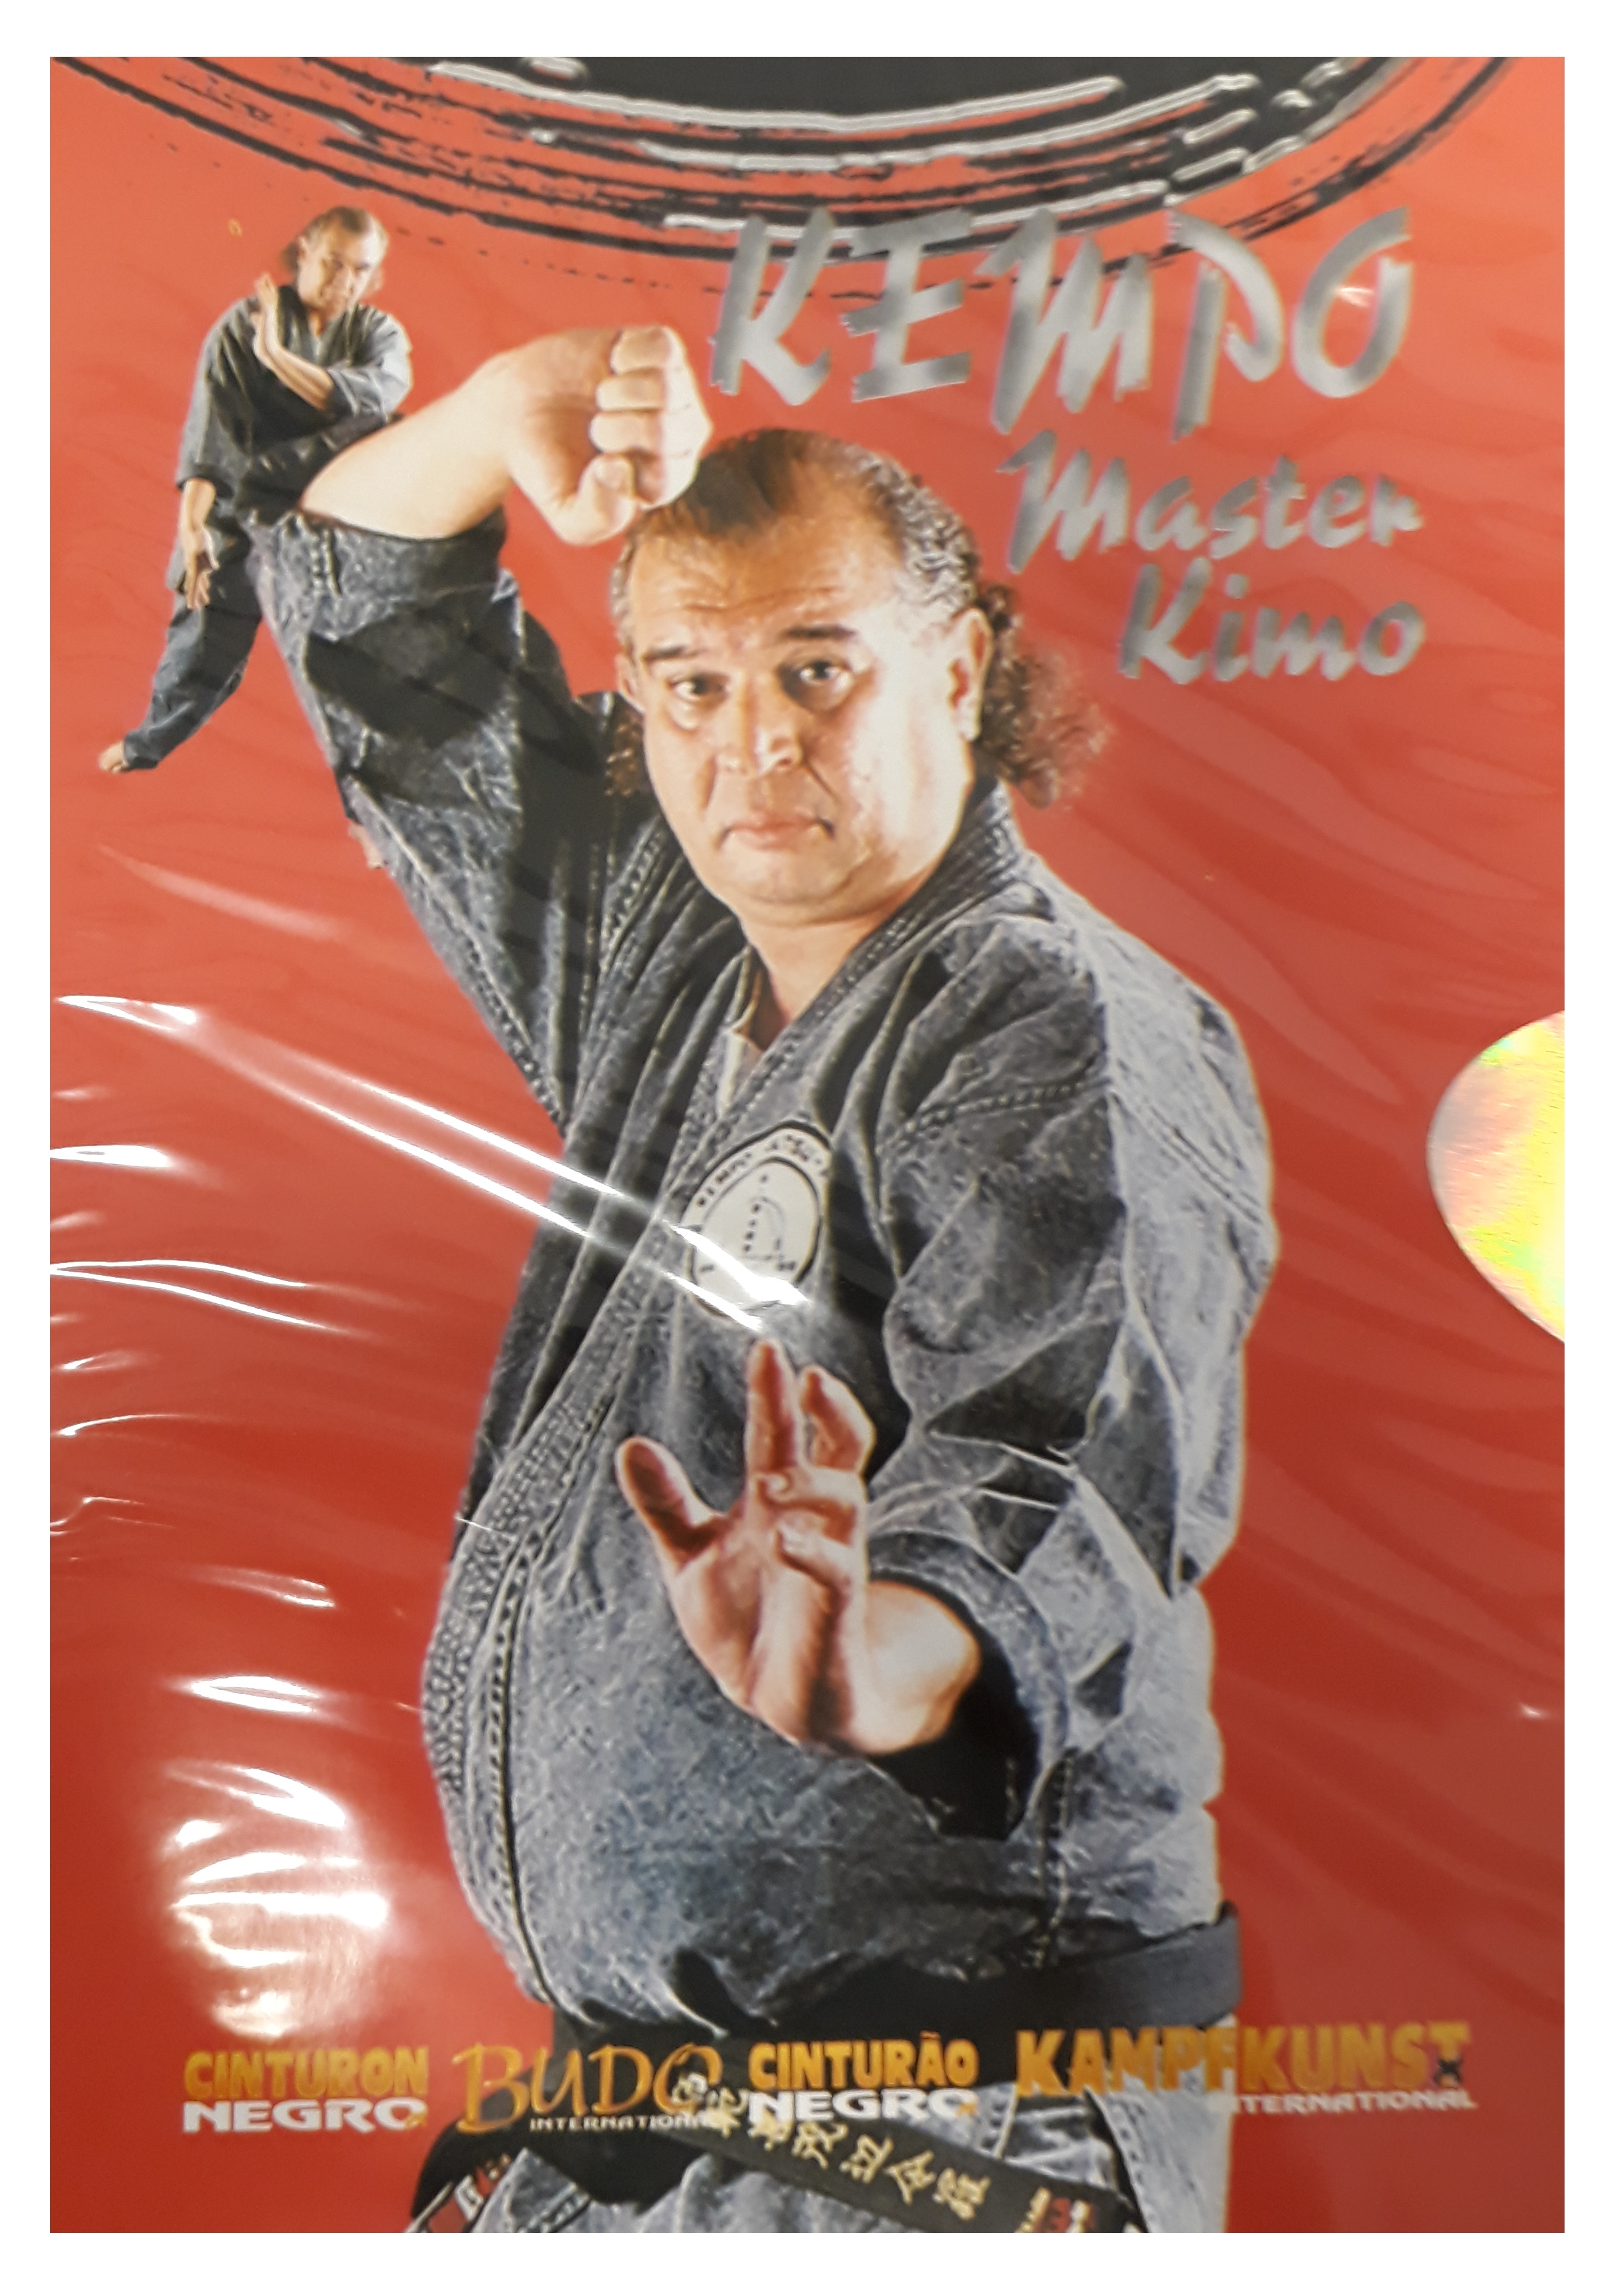 DVD Kempo Master Kimo